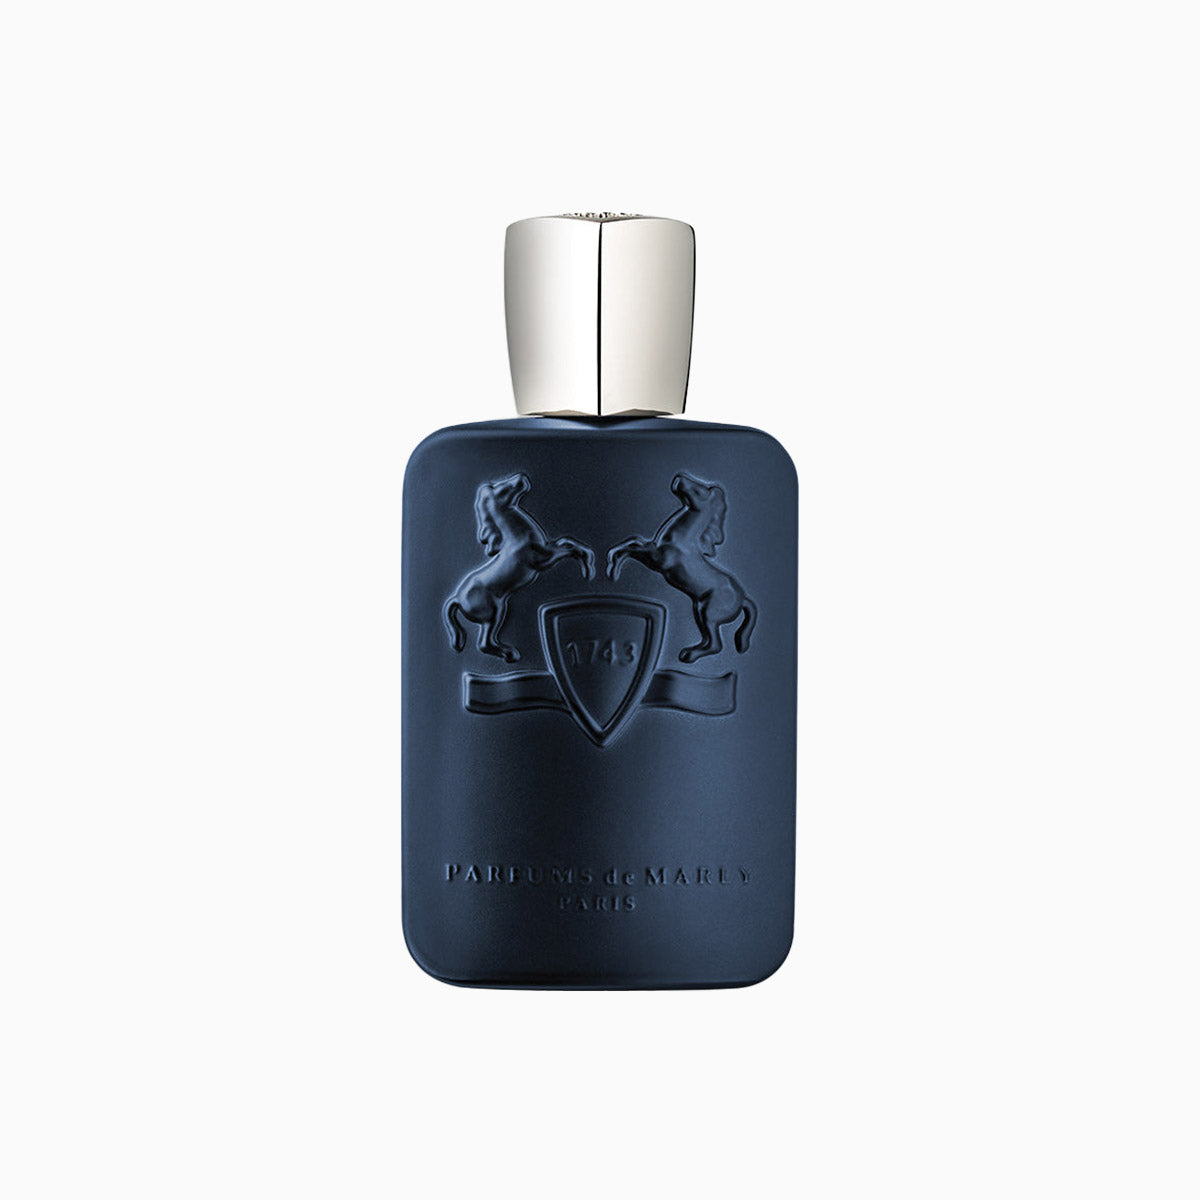 mens-parfums-de-marly-layton-edp-spray-4-2-oz-3700578518002